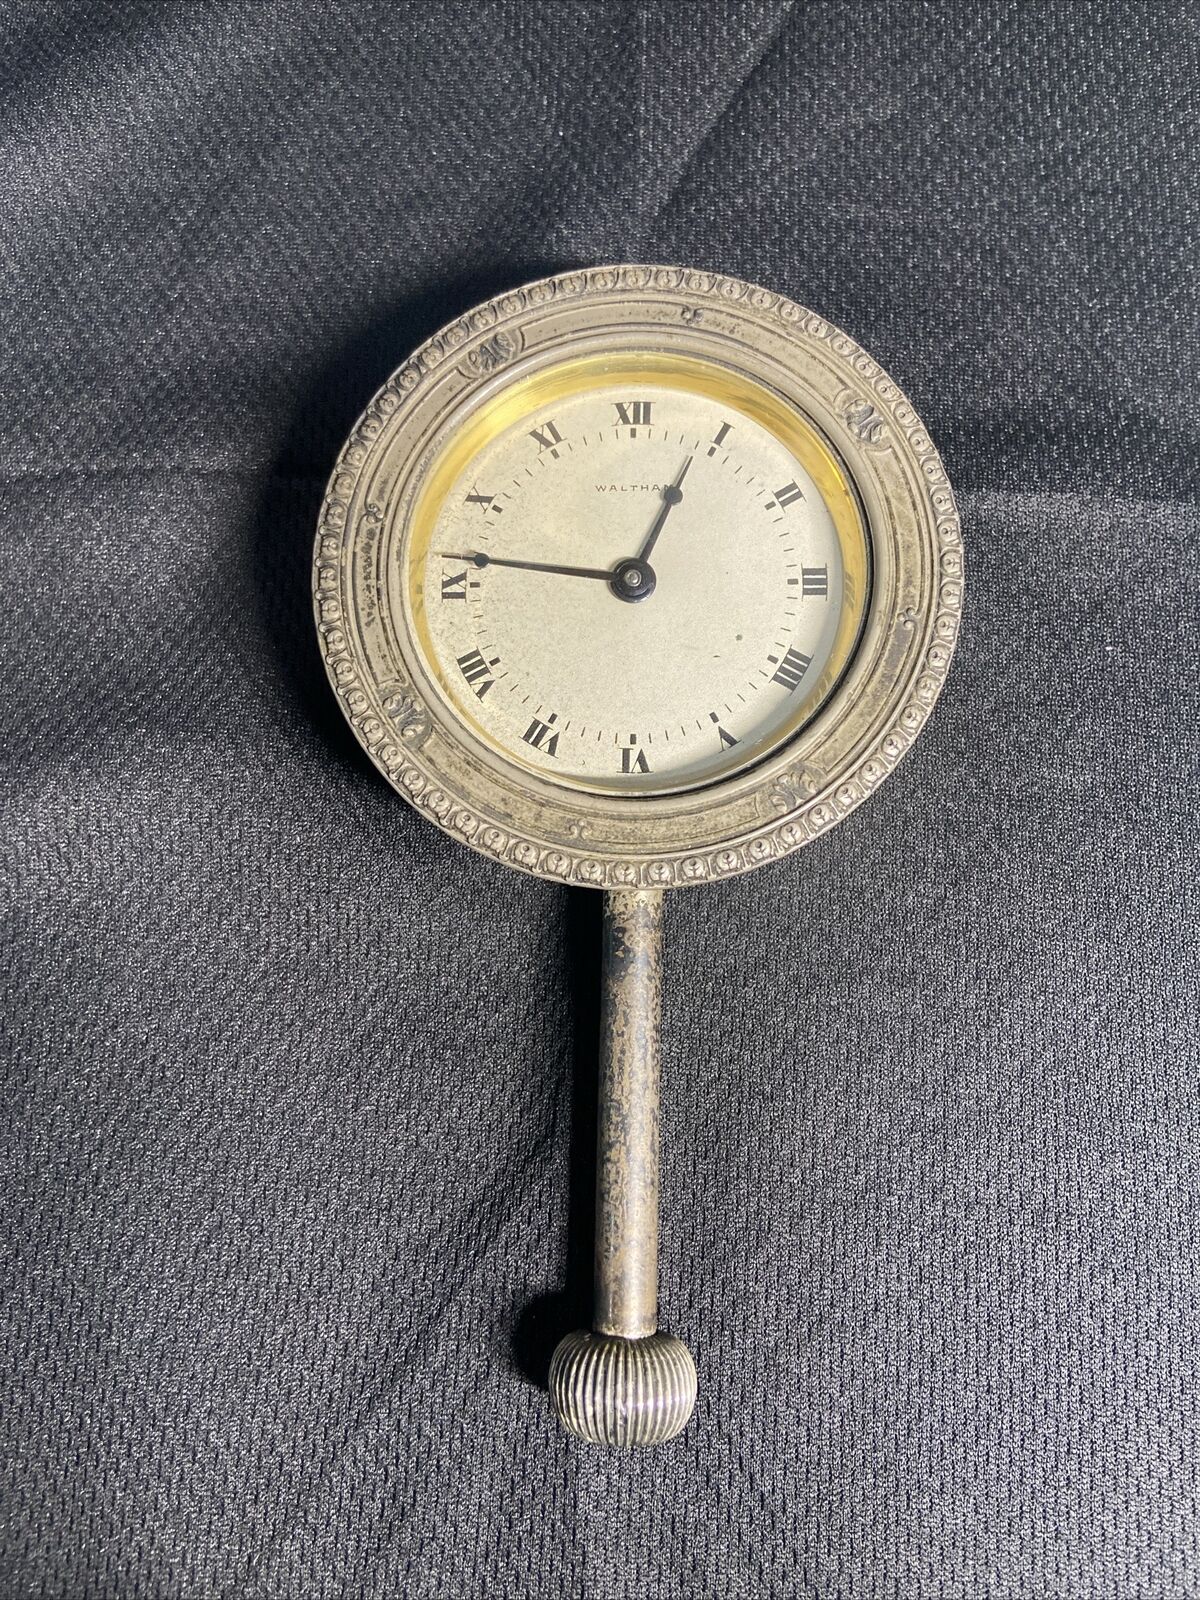 Antique Waltham Watch Co. 8 Days Stem Car Clock C.1920 Model 1910 37s 7j Works